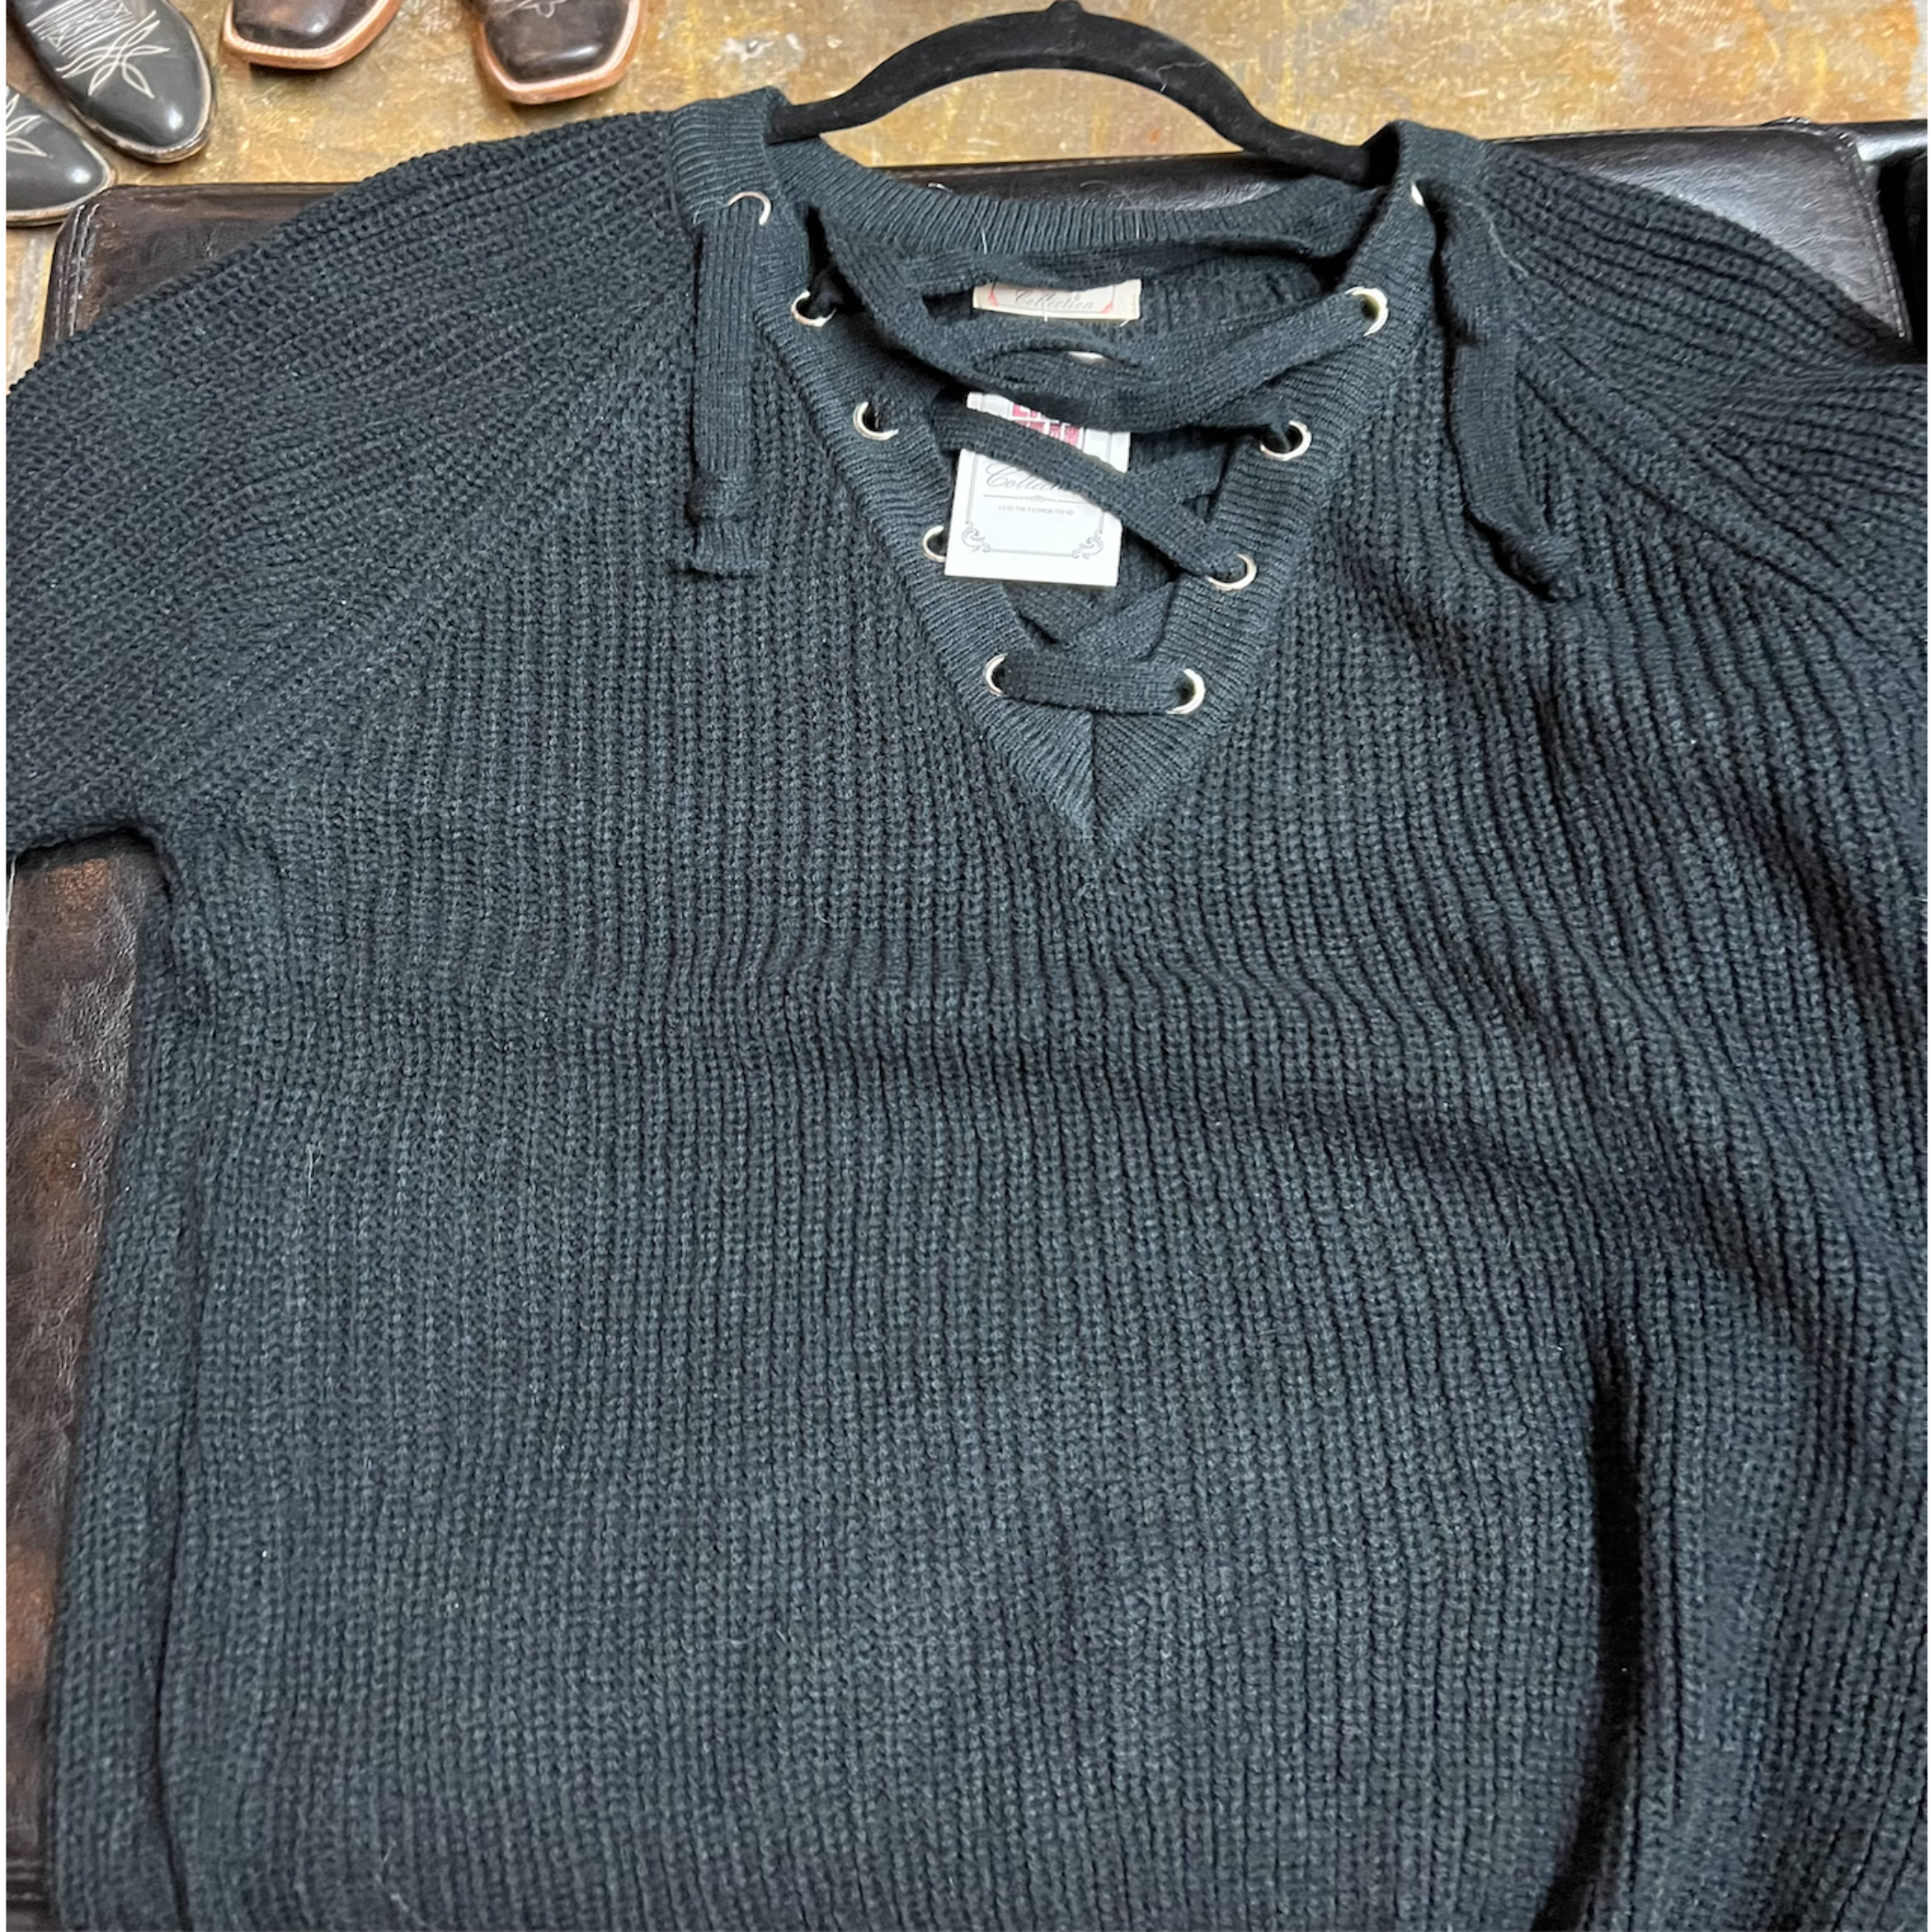 Black Sweater w/ Ties